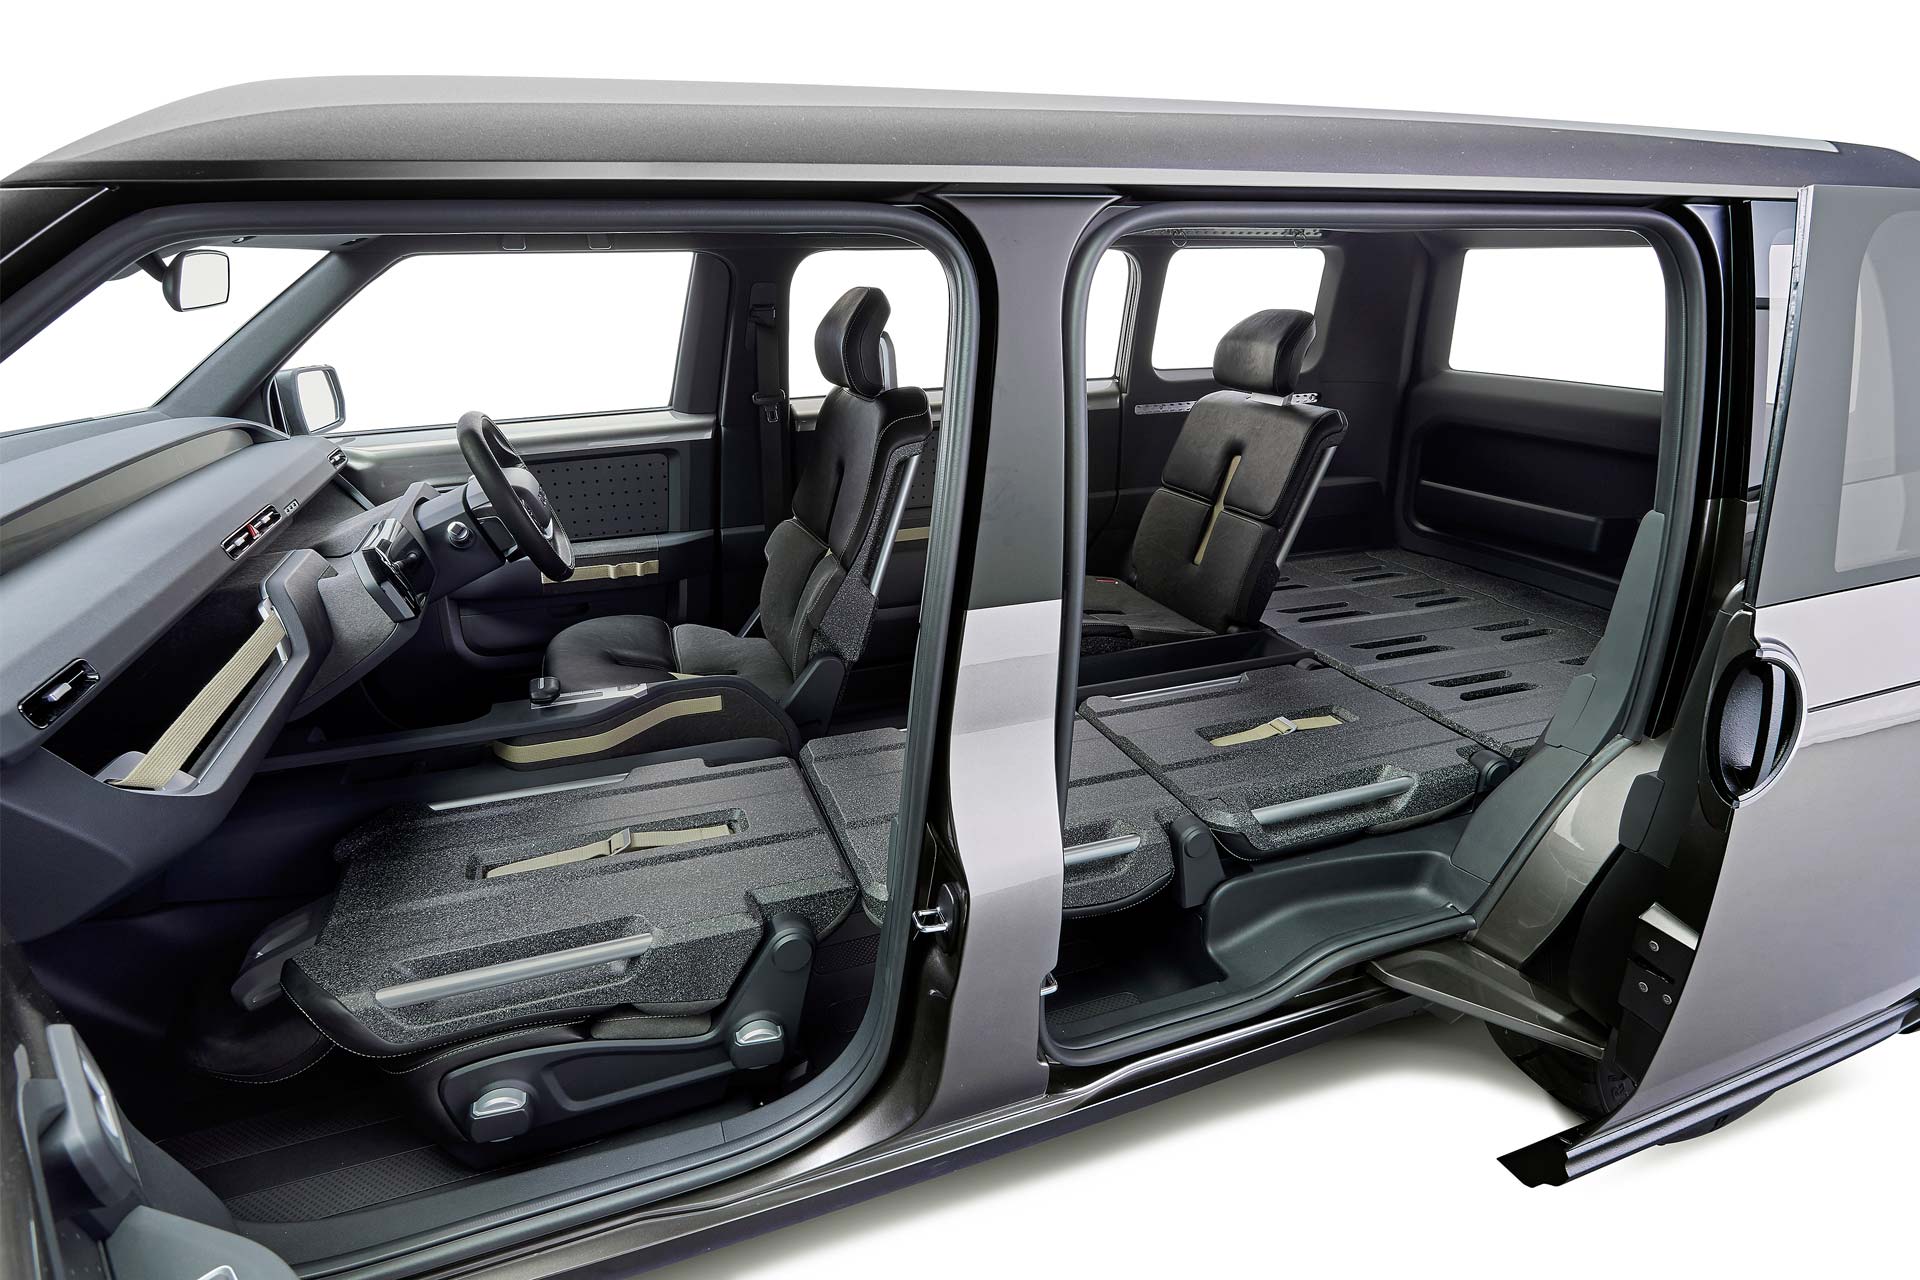 Toyota-TJ-Cruiser-concept-interior_2